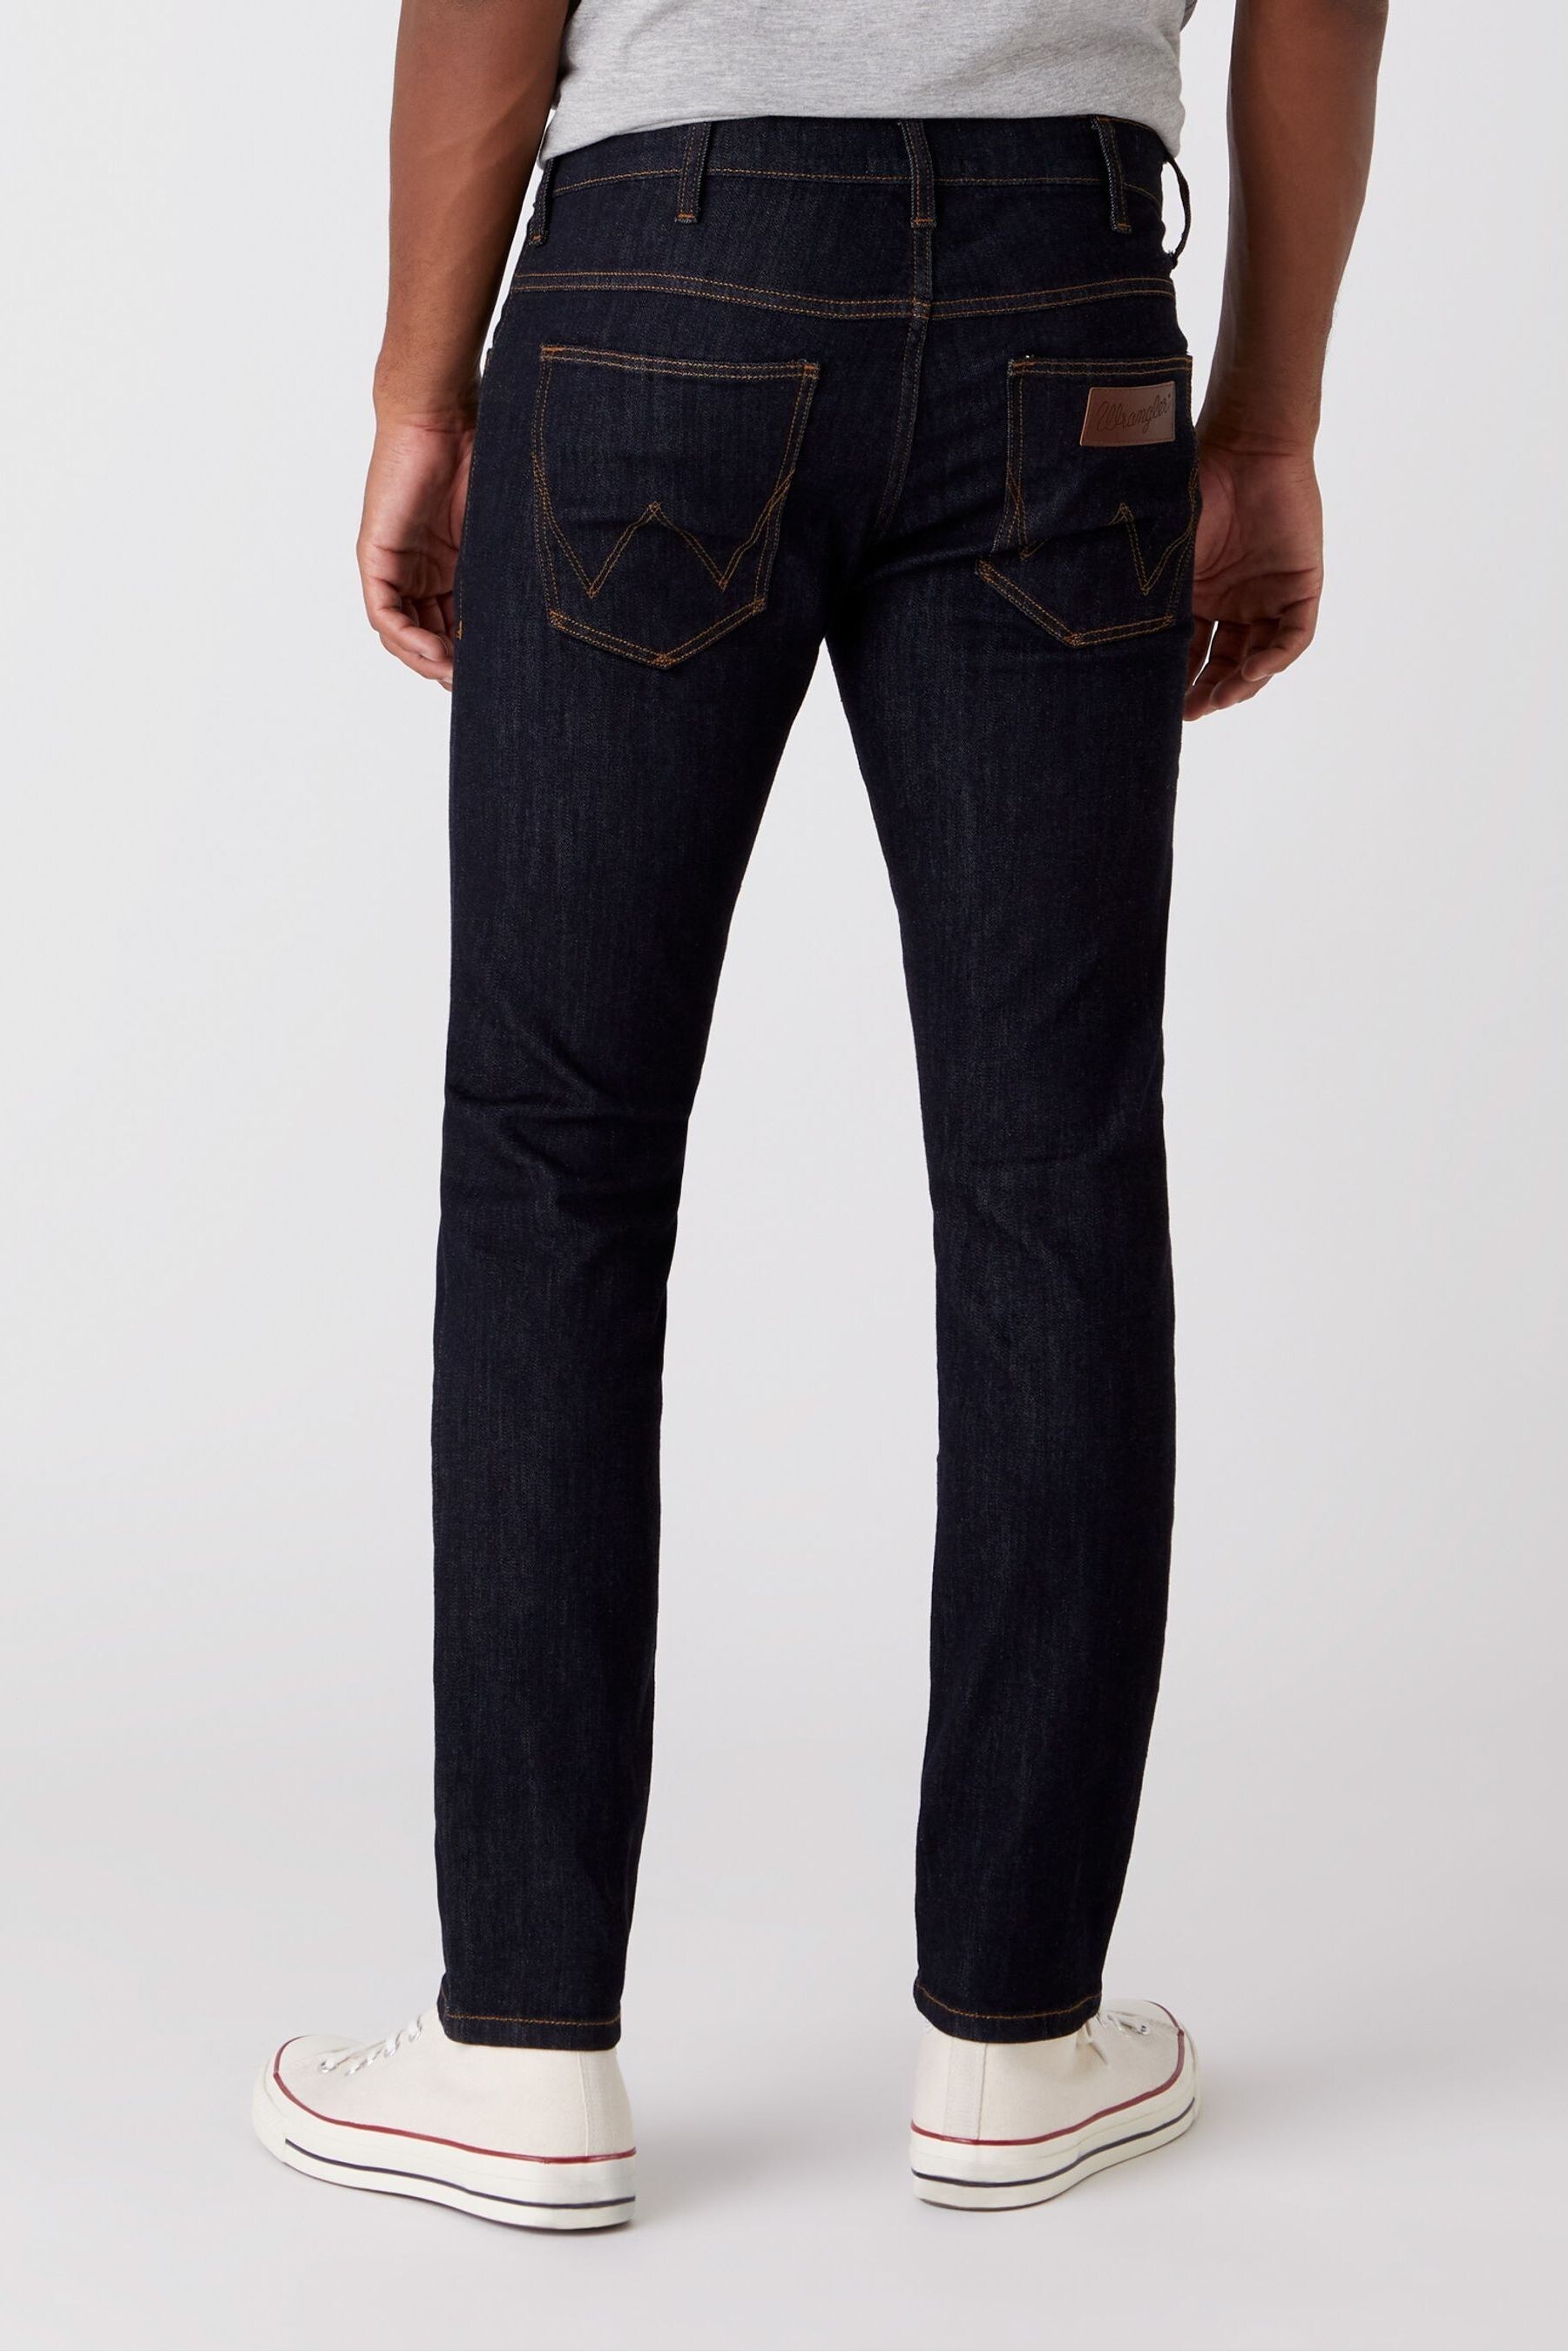 Buy Wrangler Larston Dark Rinse Slim Tapered Jeans from Next Ireland